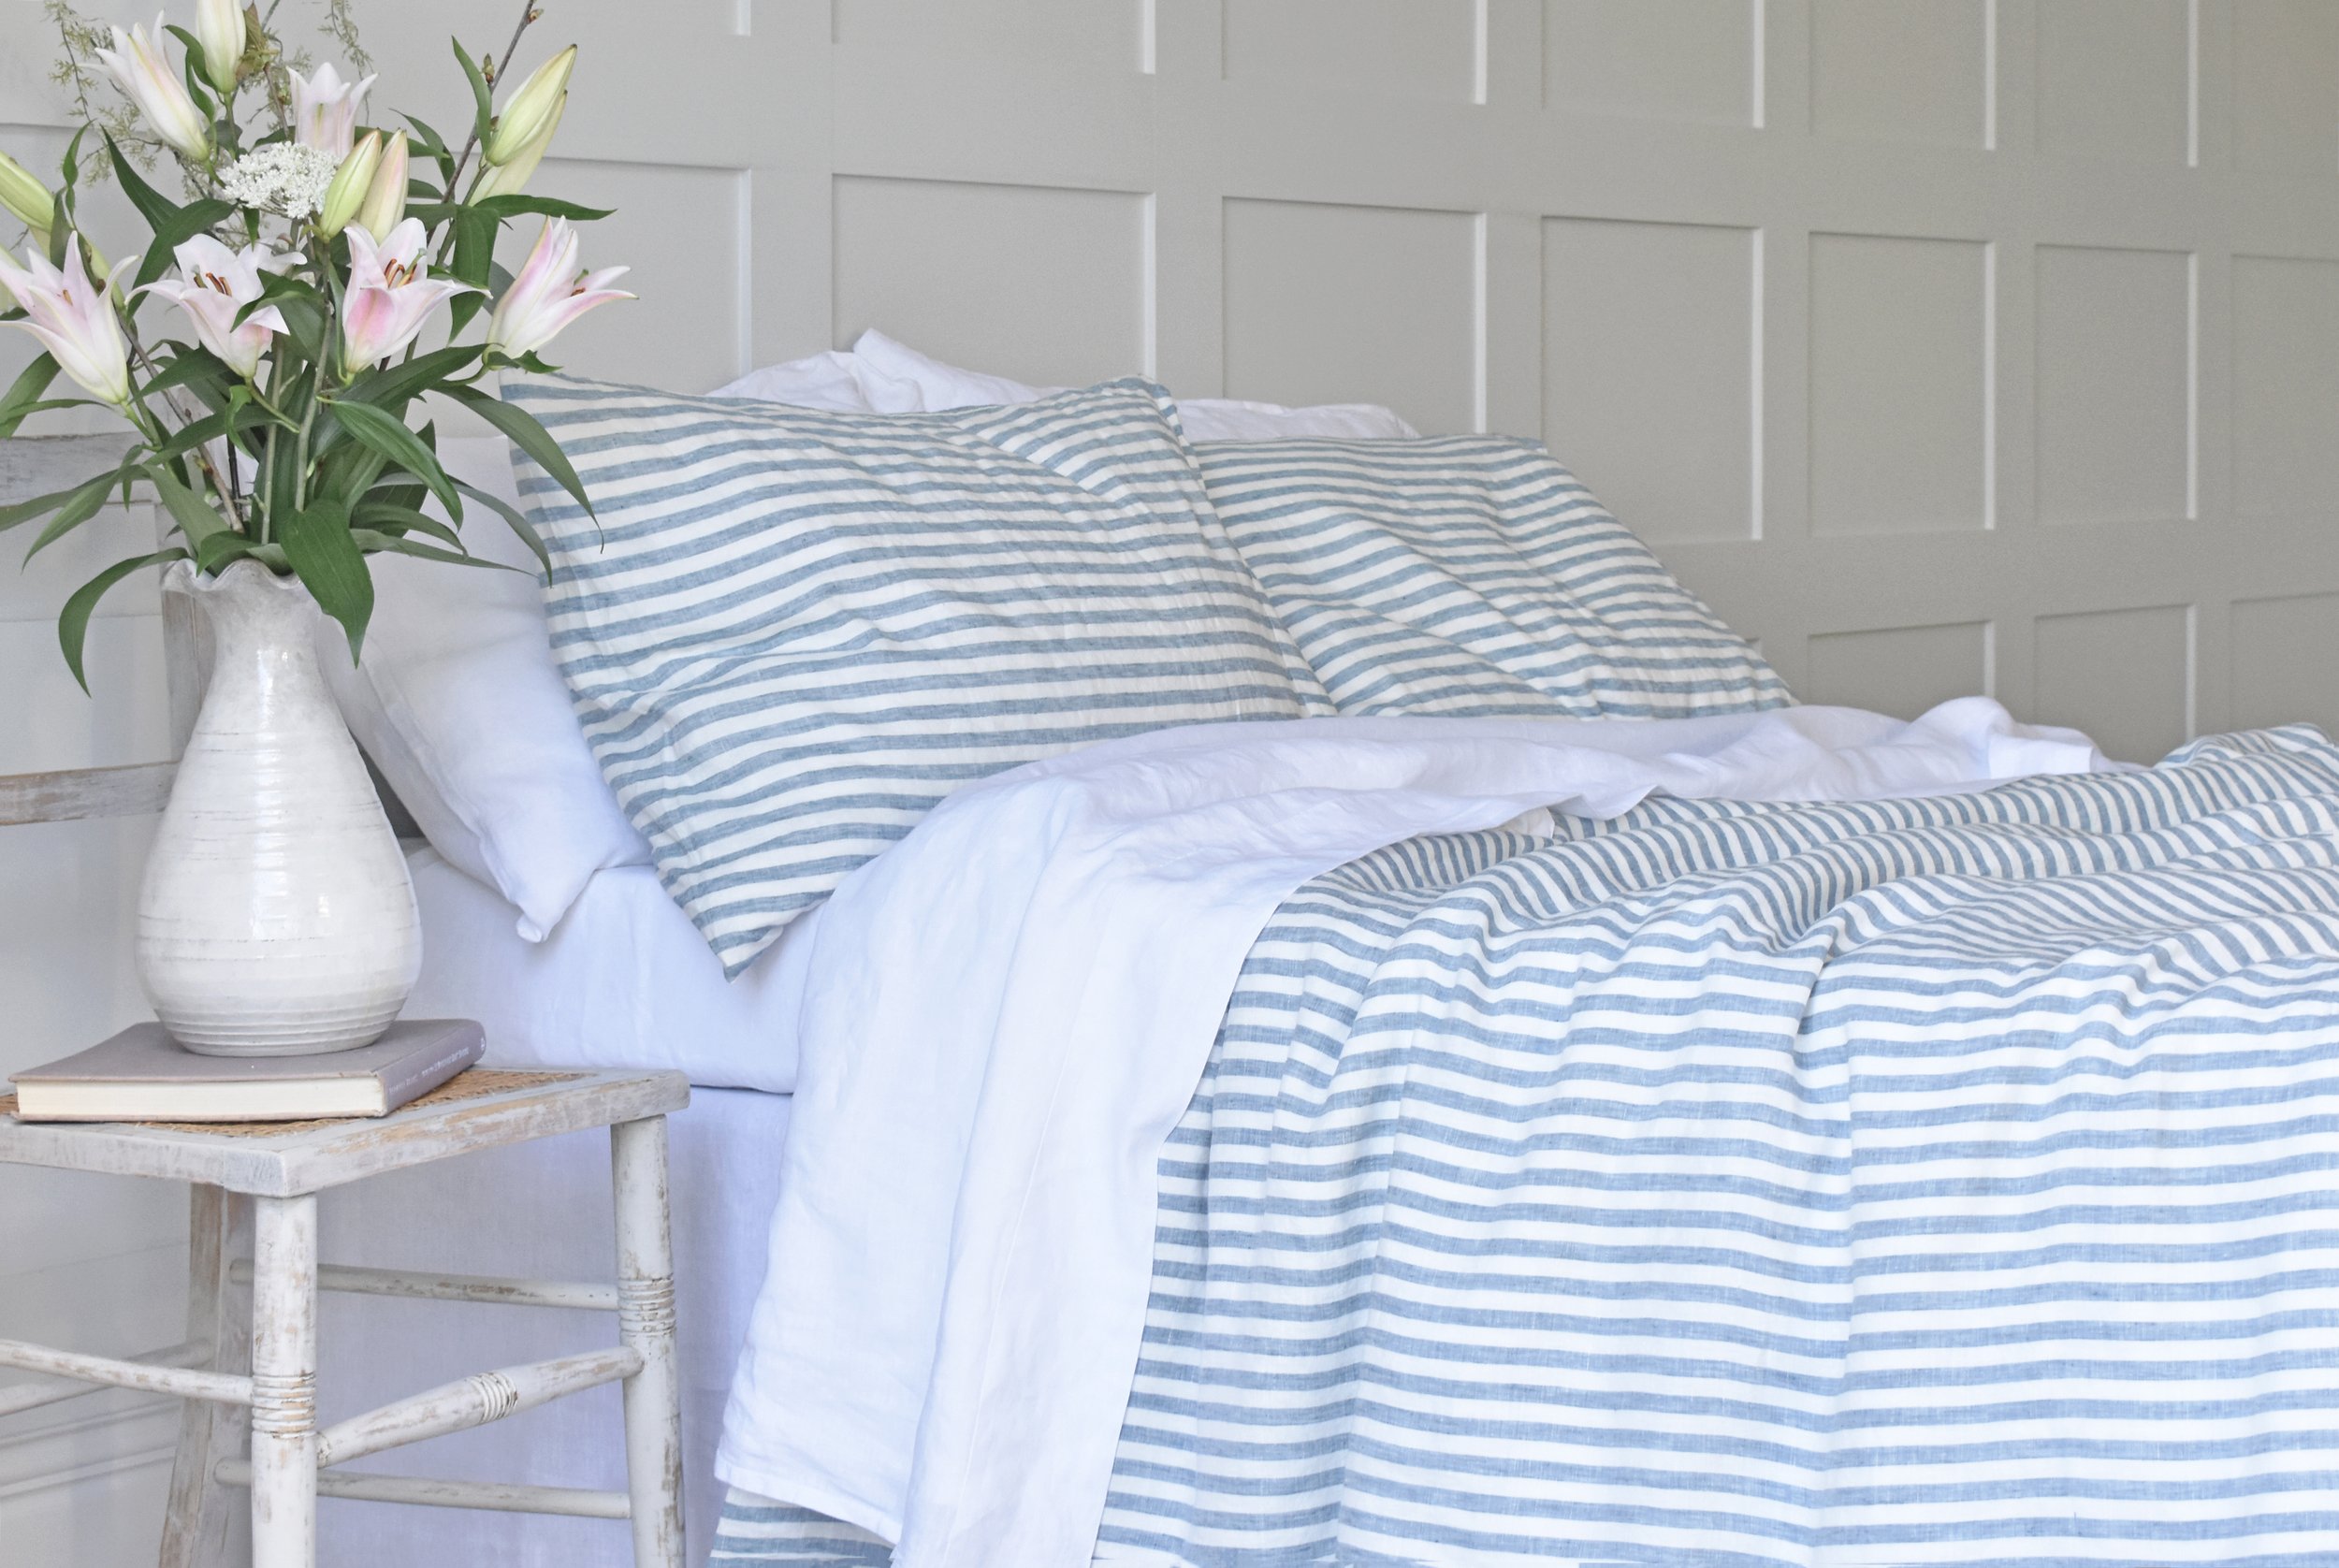 3.CHALK PINK LINEN COMPANY Pure Linen Bedding - Blue Ticking Stripe Duvet Cover €157.45